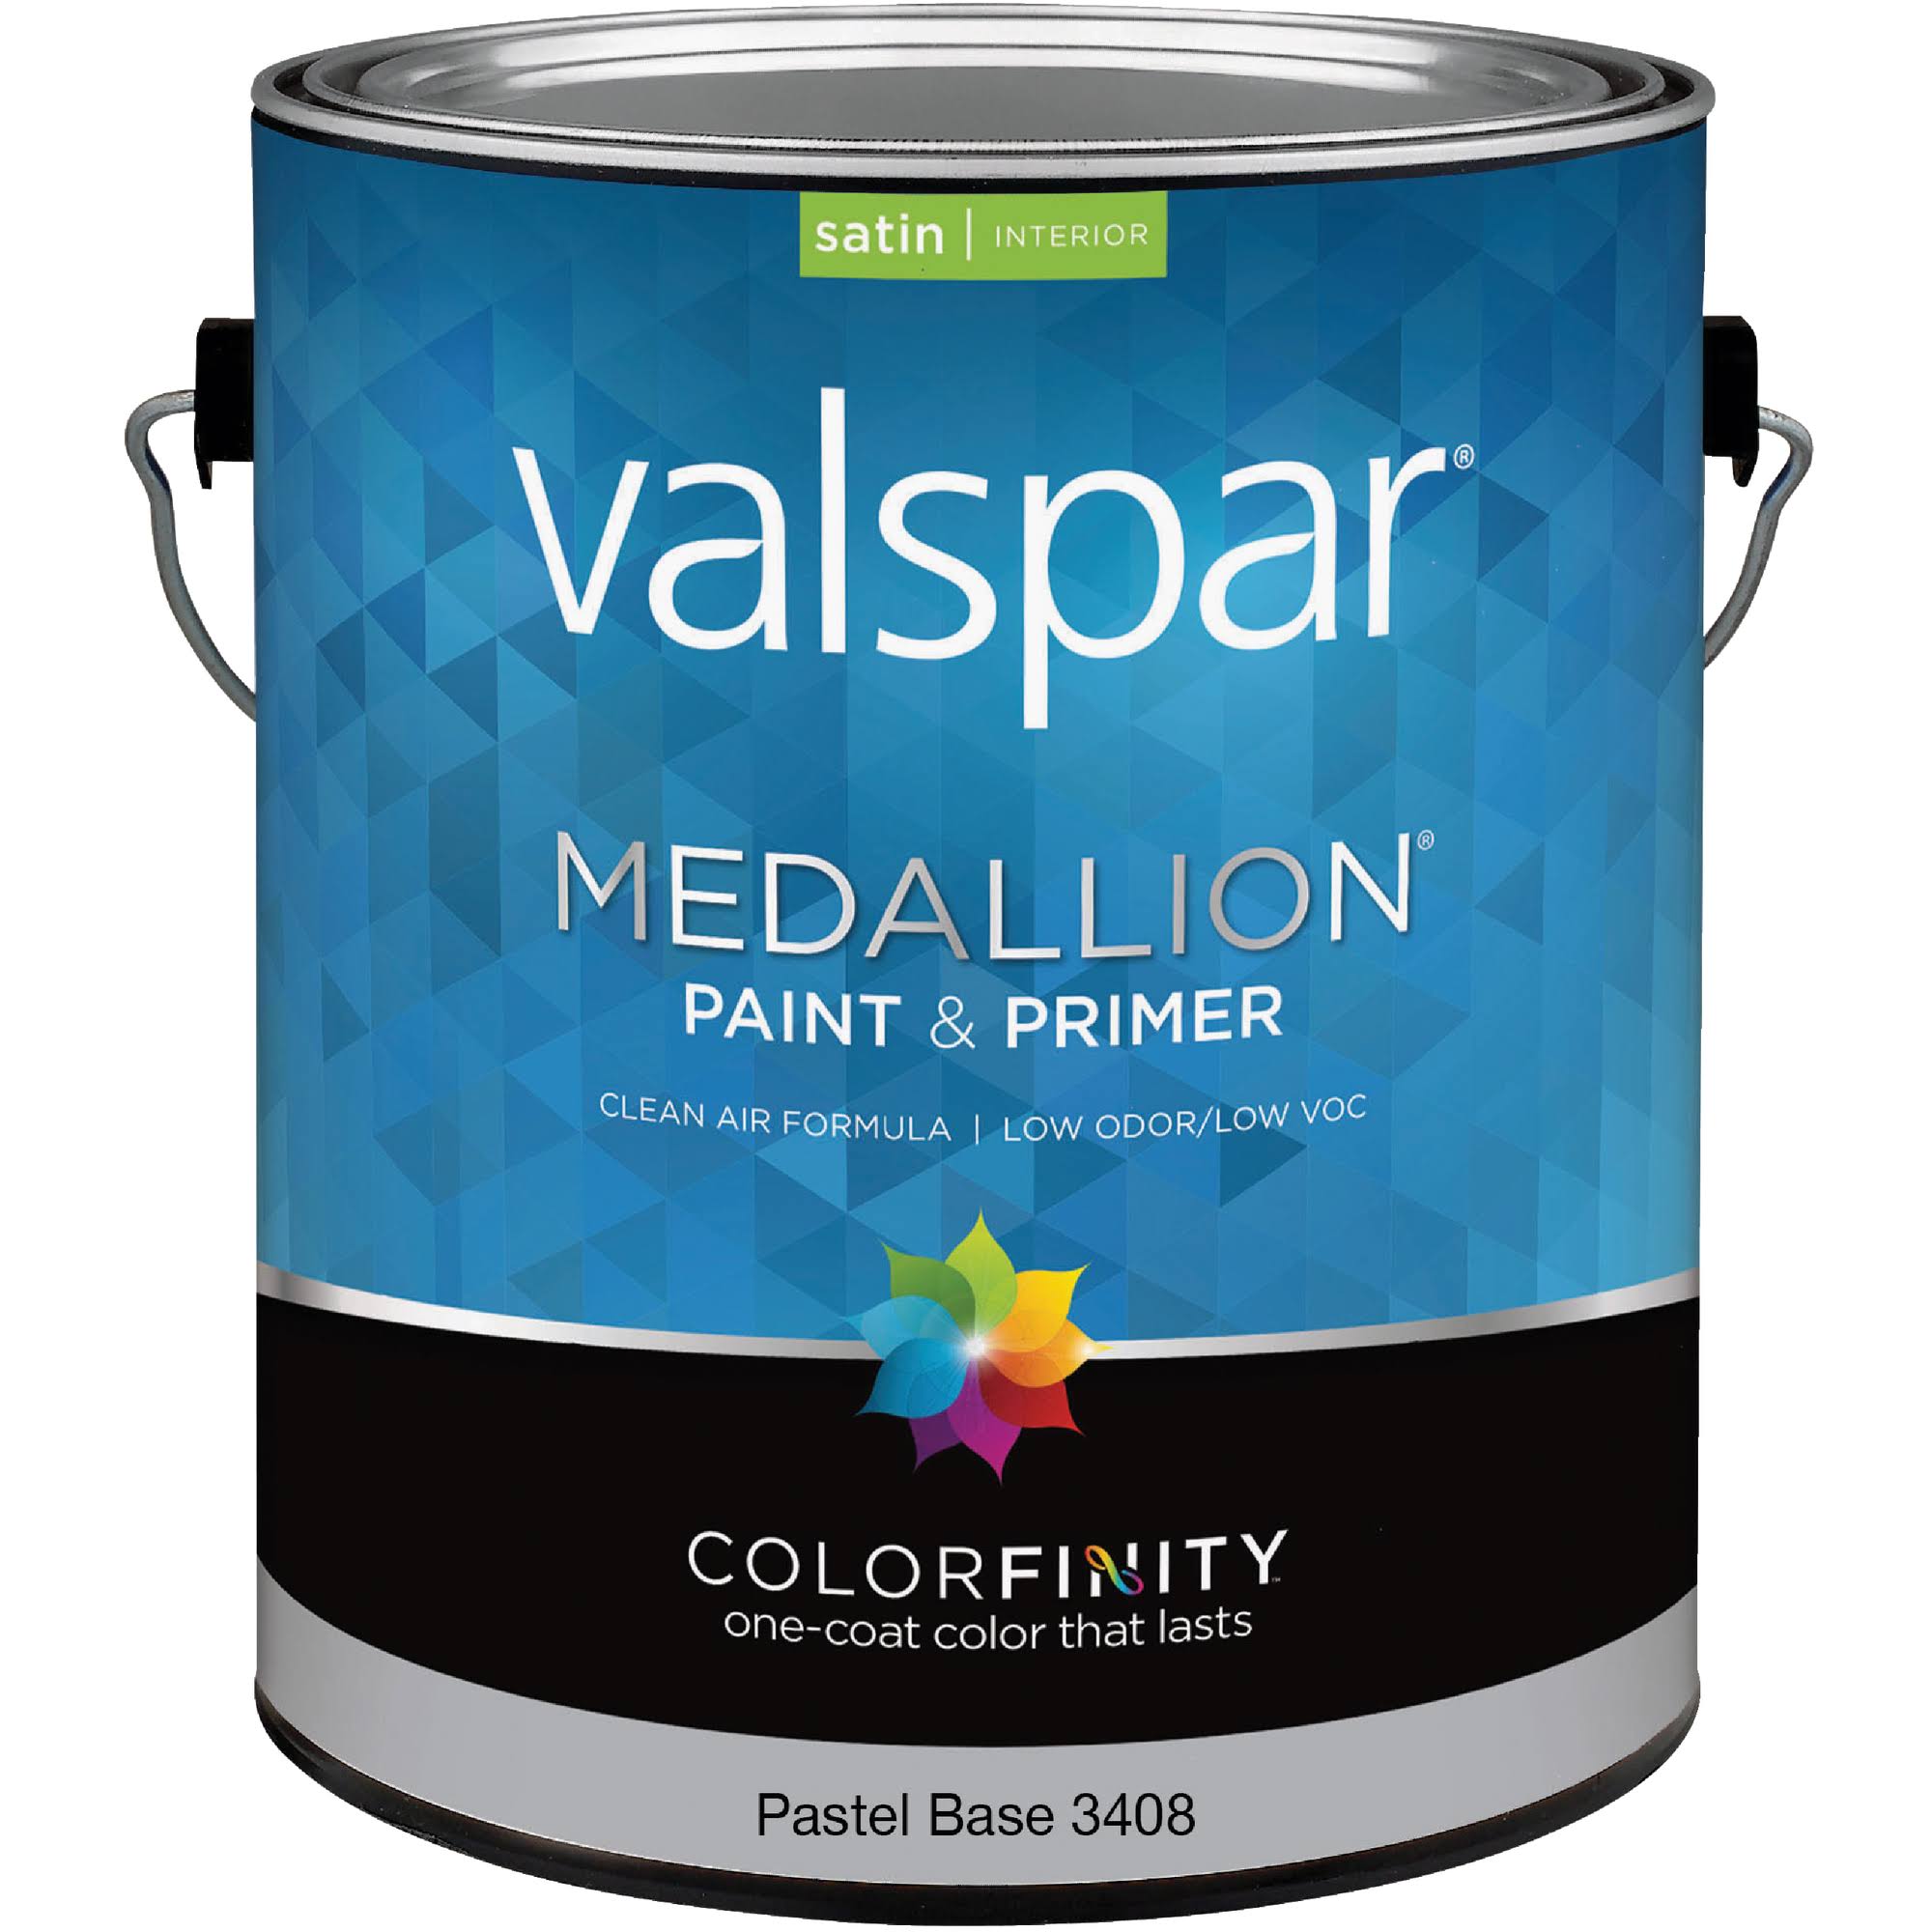 Valspar Medallion Interior Latex Paint - Satin Pastel Base, 1 Gallon